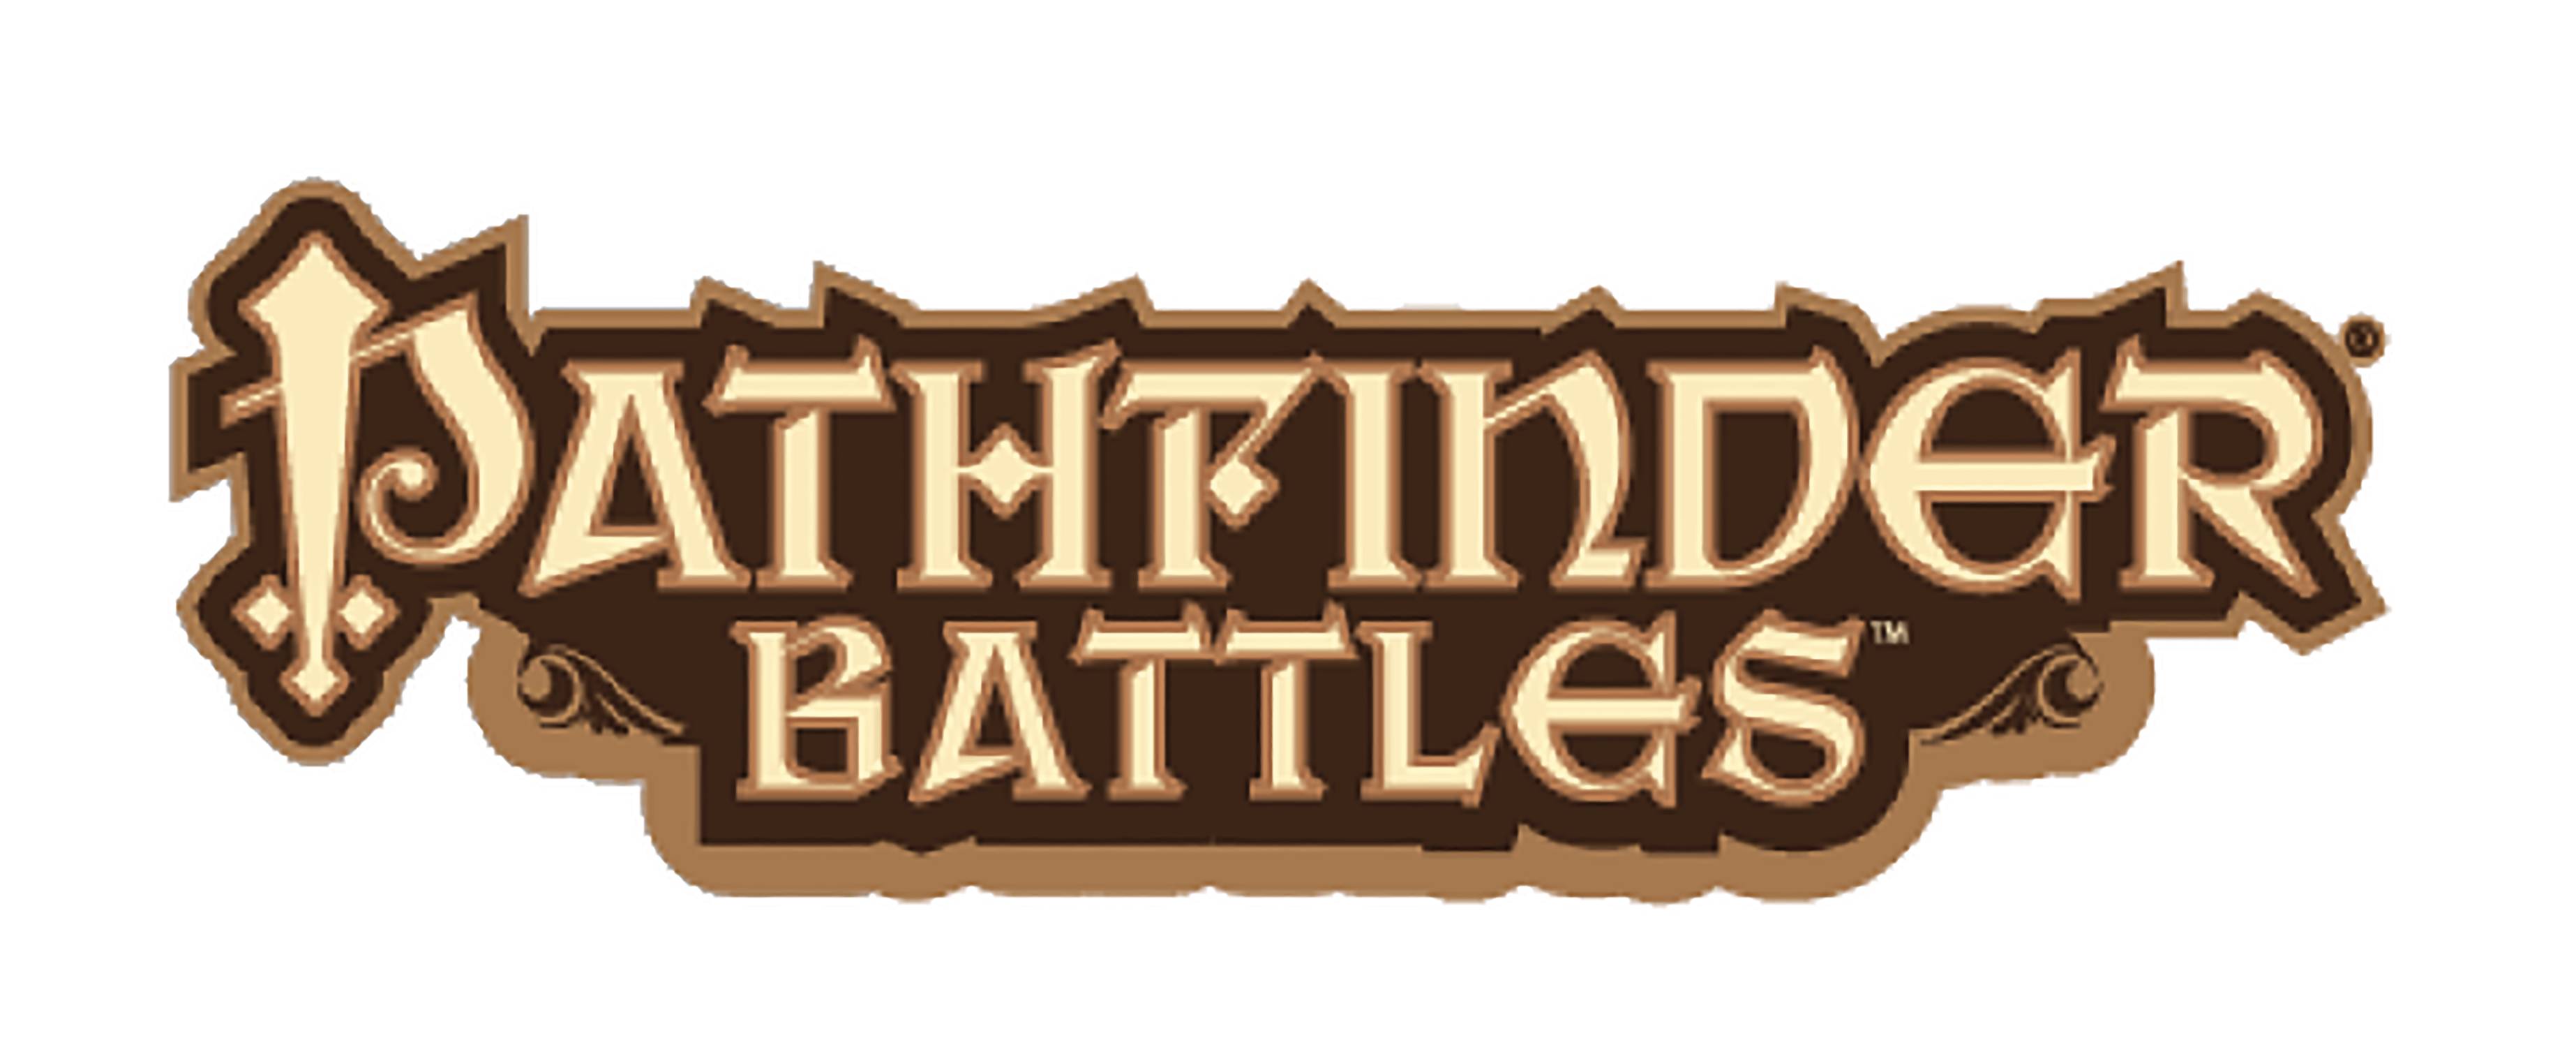 Pathfinder Battles Legendary Adventure 8ct Booster Brick